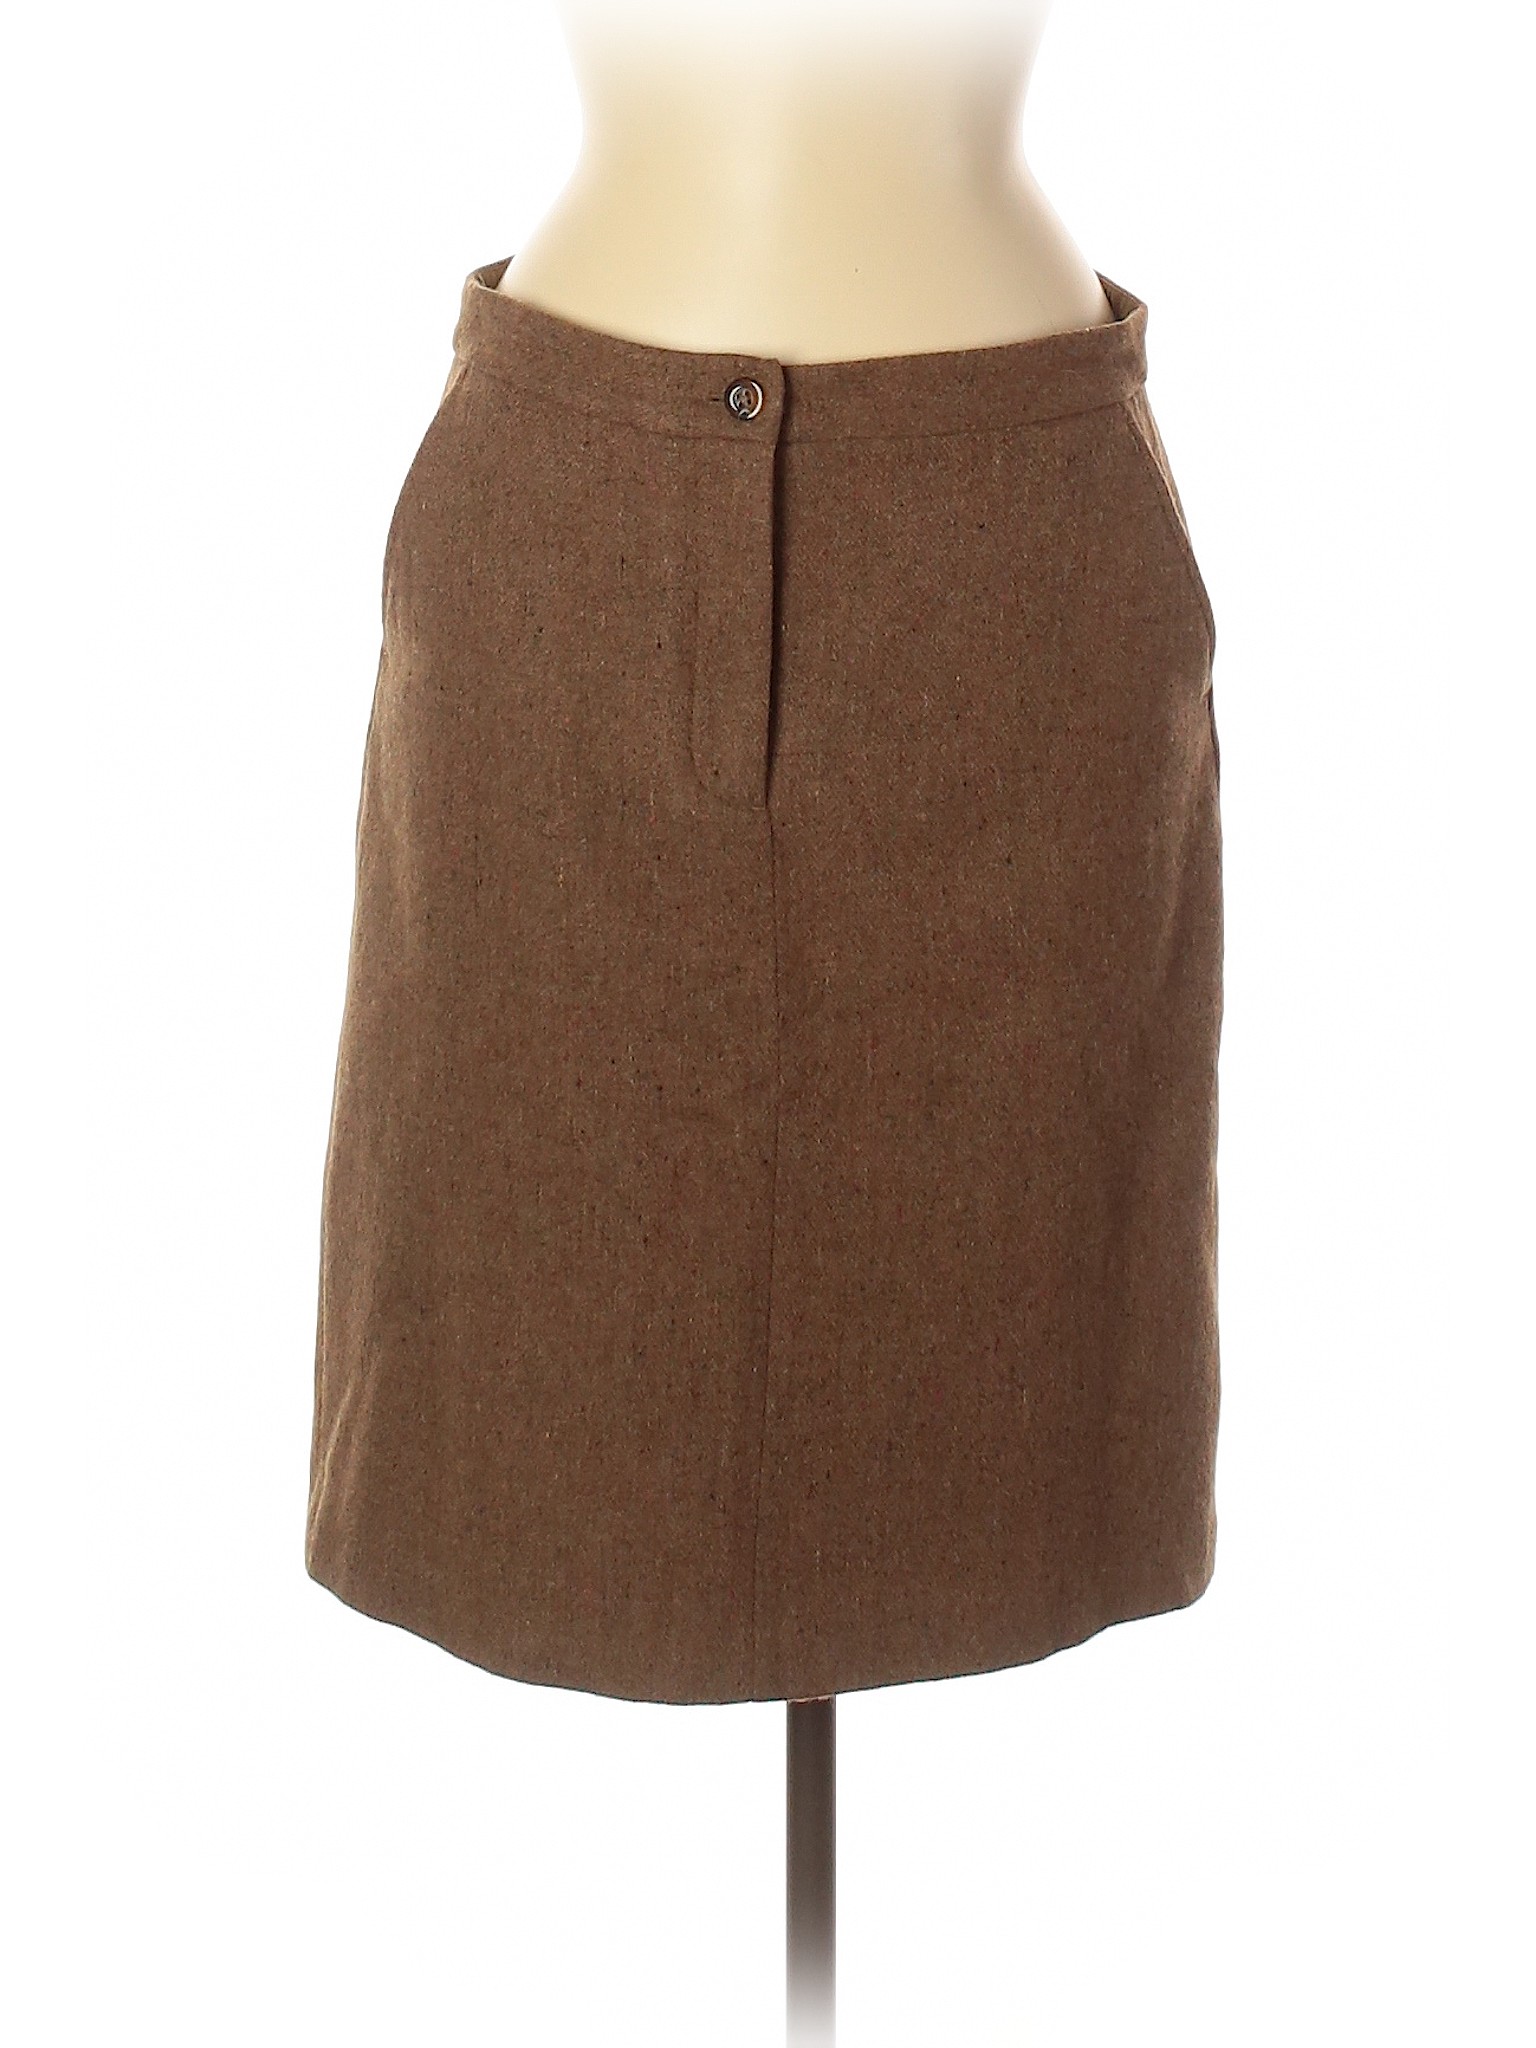 Orvis Women Brown Wool Skirt 8 | eBay